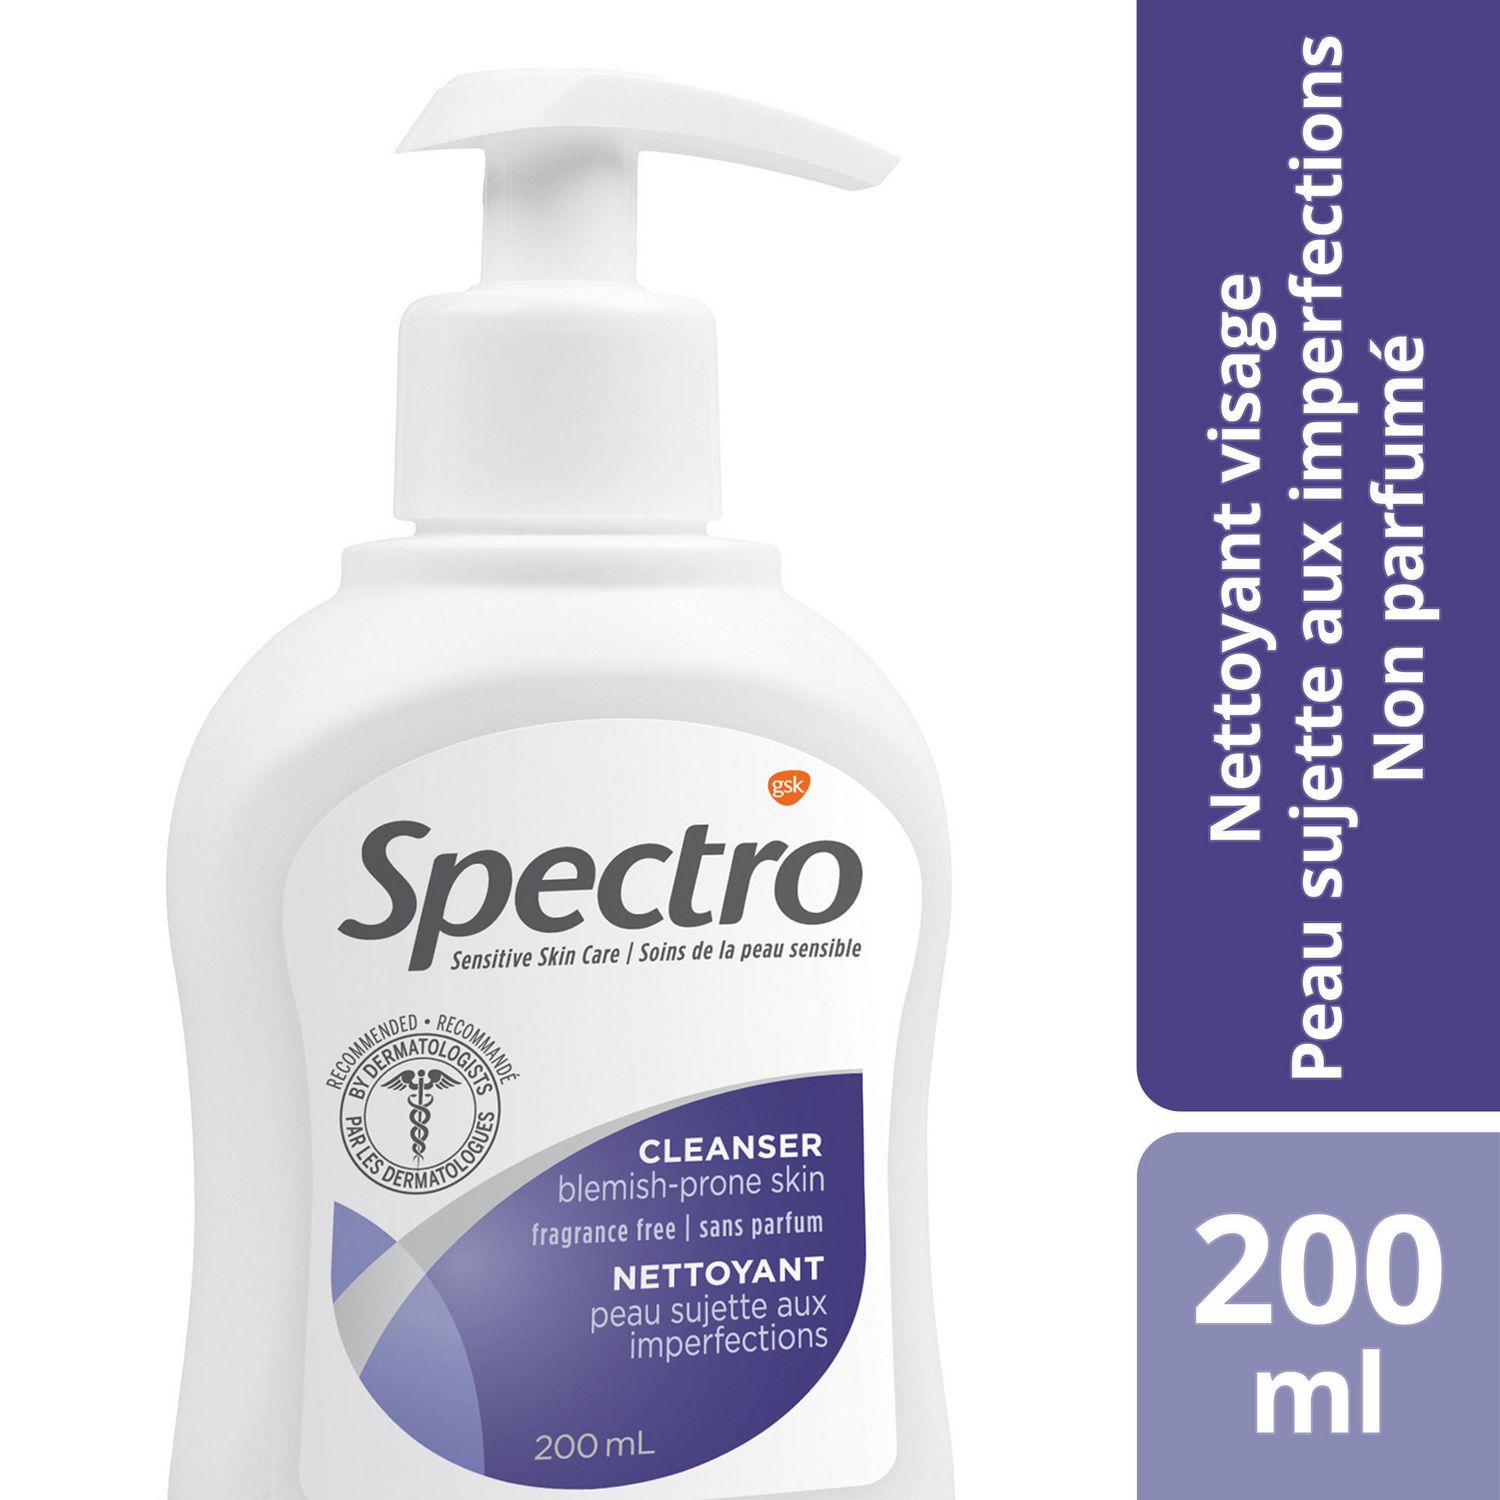 Skincare, New Spectro Cleanser Blemish Prone Sensitive Skin Fragrance Free  20ml